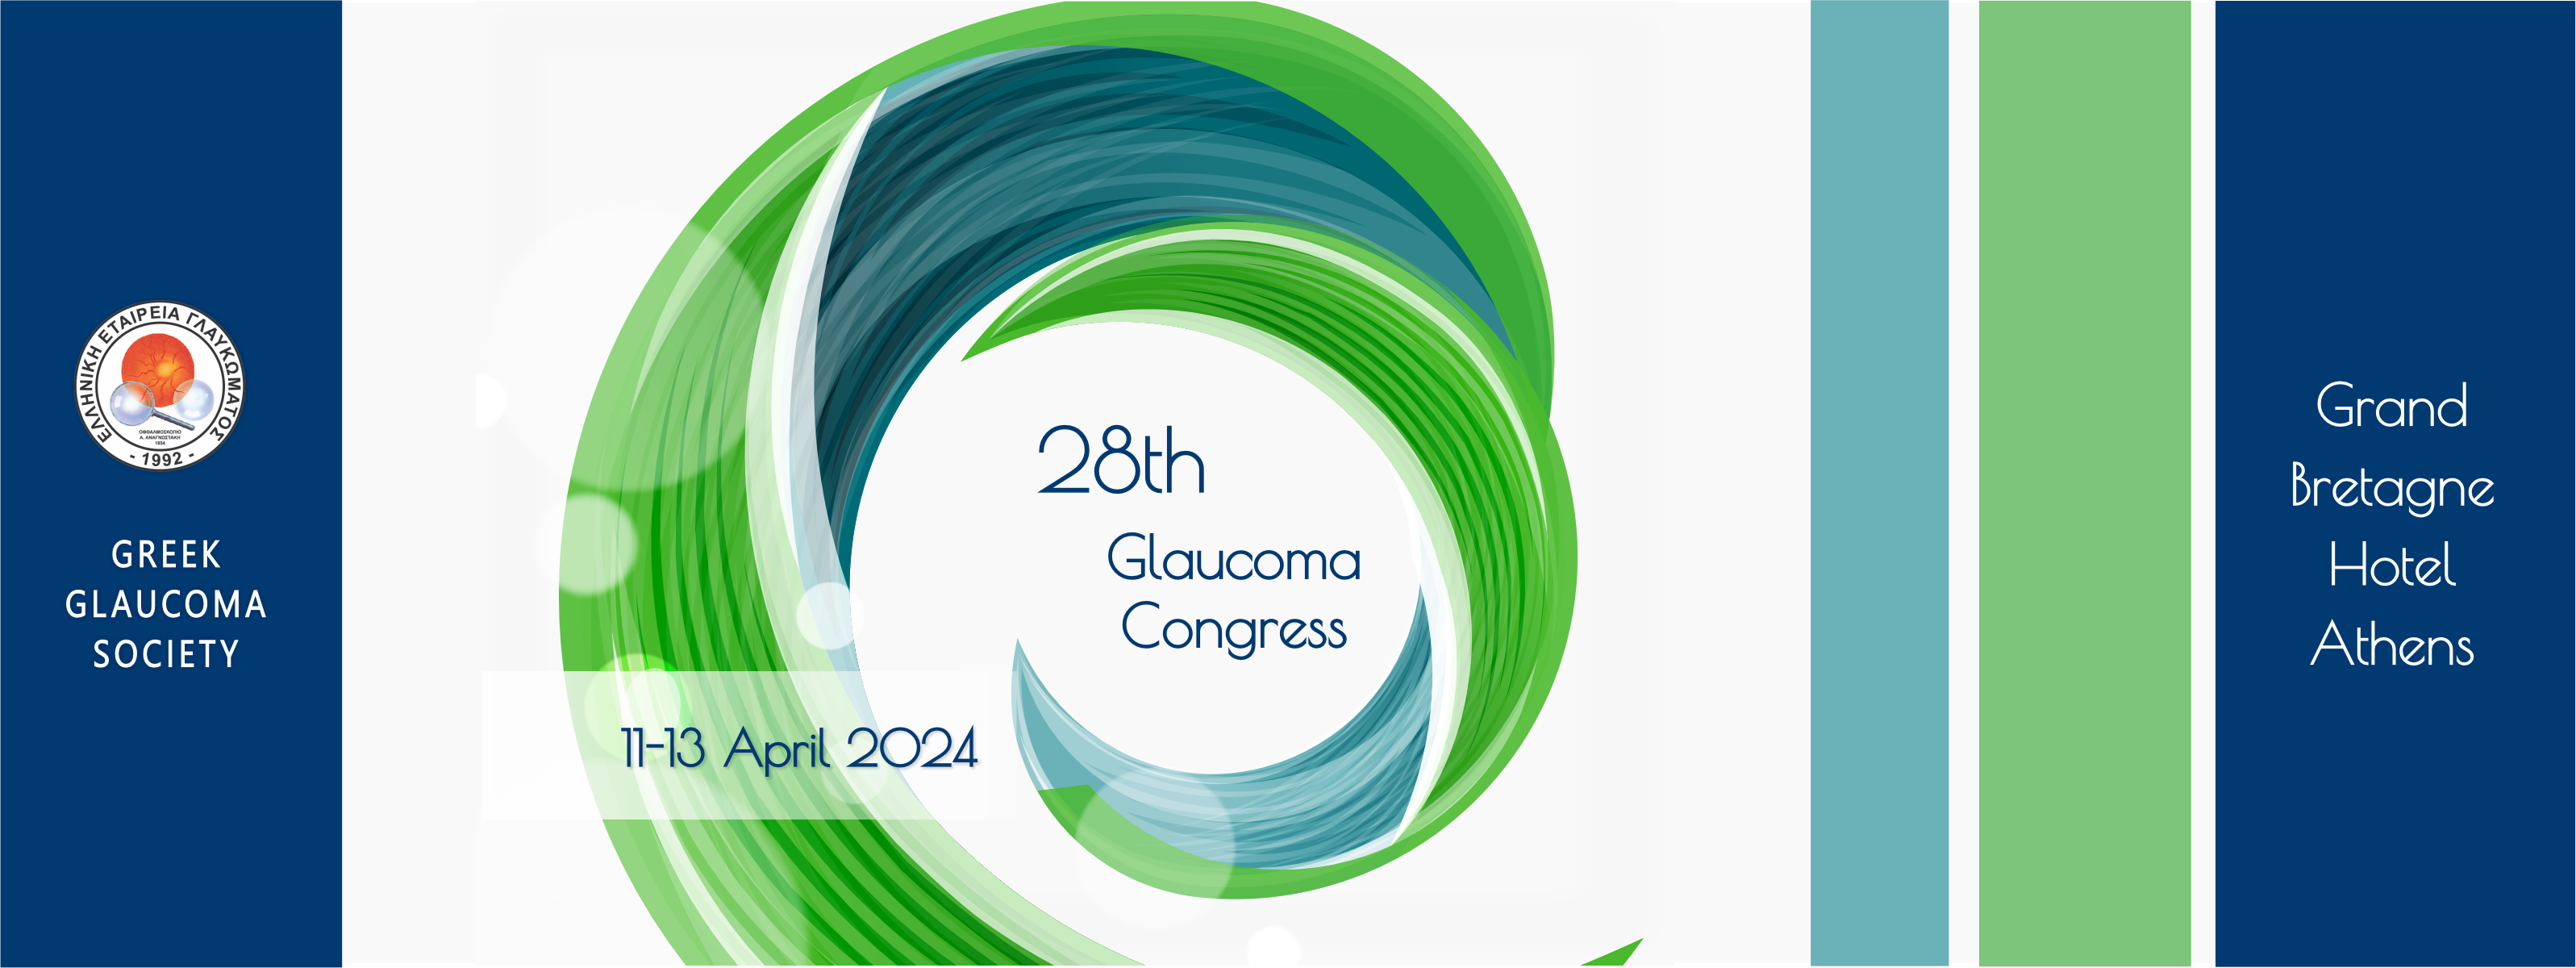 28th Greek Glaucoma Congress